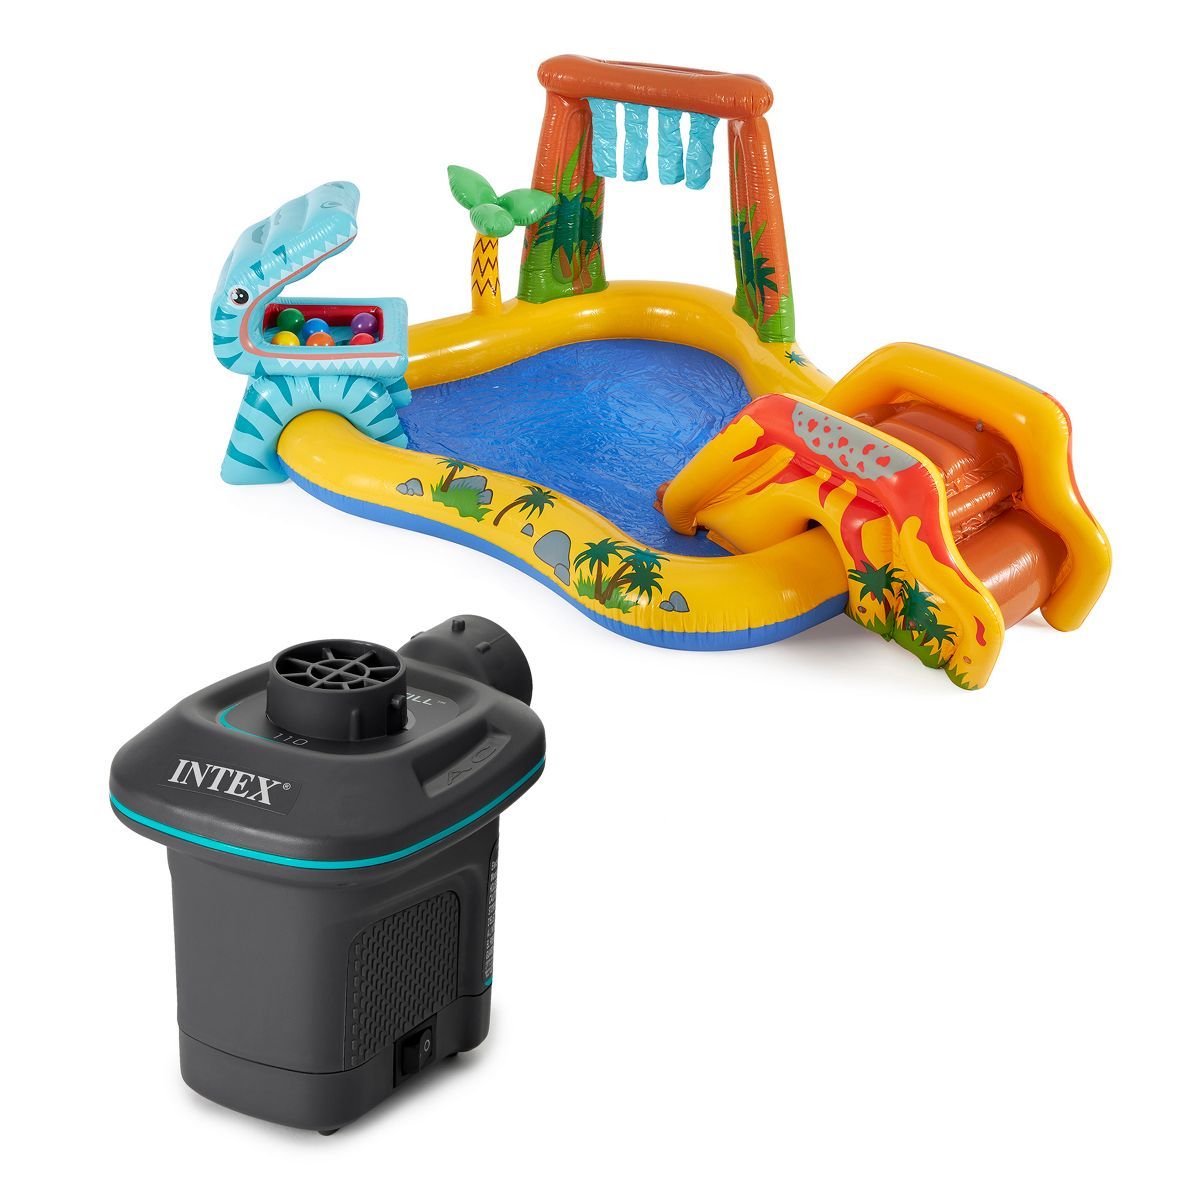 Intex 120V Electric Air Pump & Intex Inflatable Dinosaur Play Center Kids Pool | Target